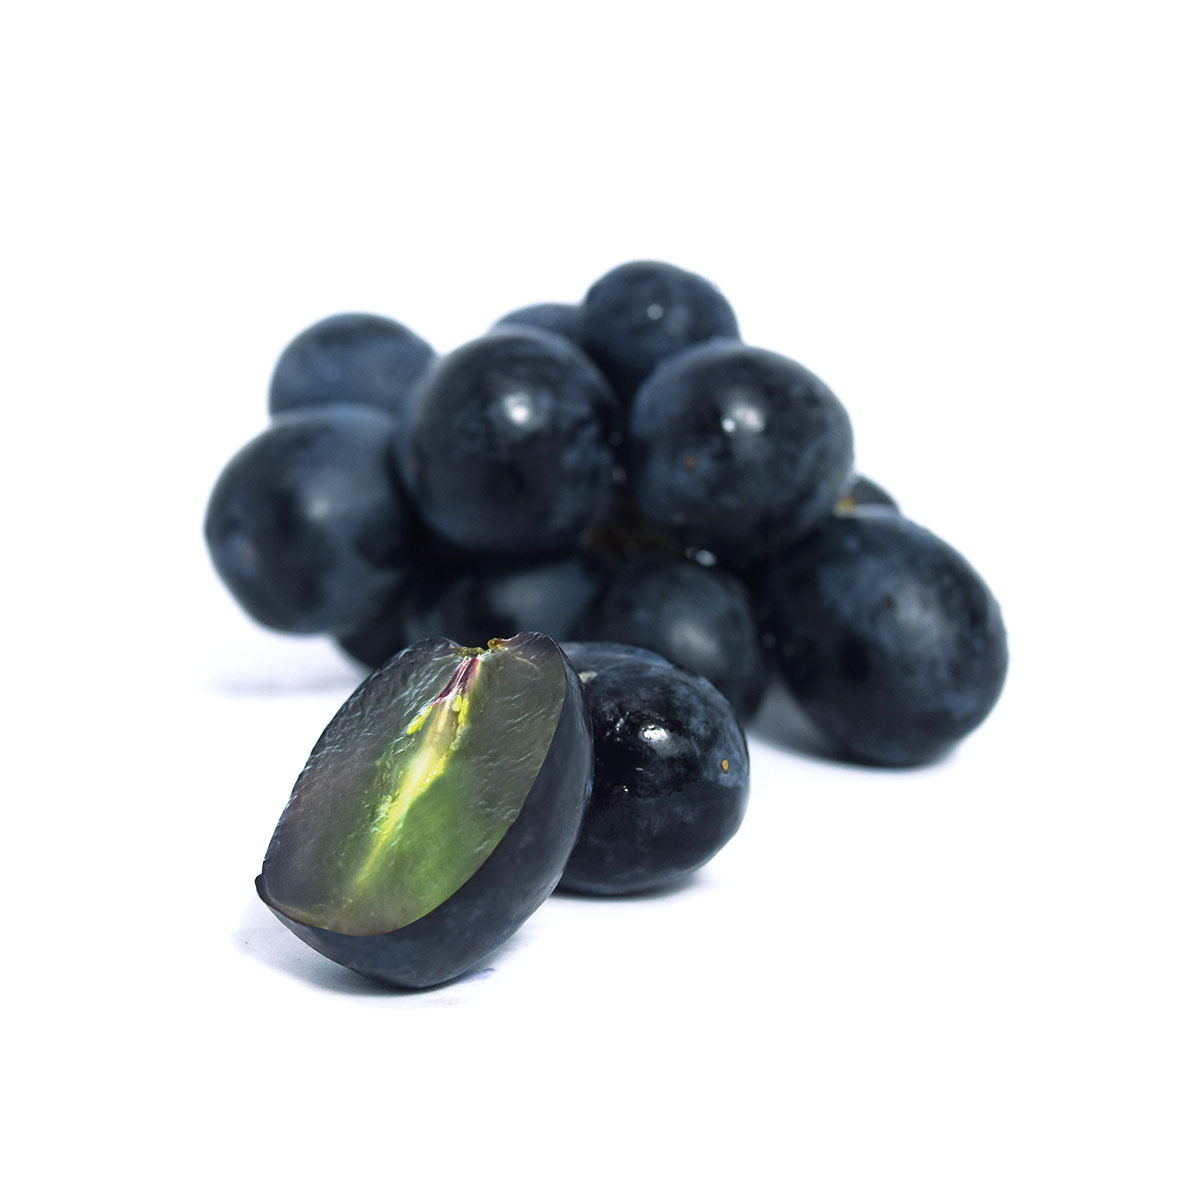 Jual My Fruit Anggur Hitam  Seedless 500 gr Online Februari 